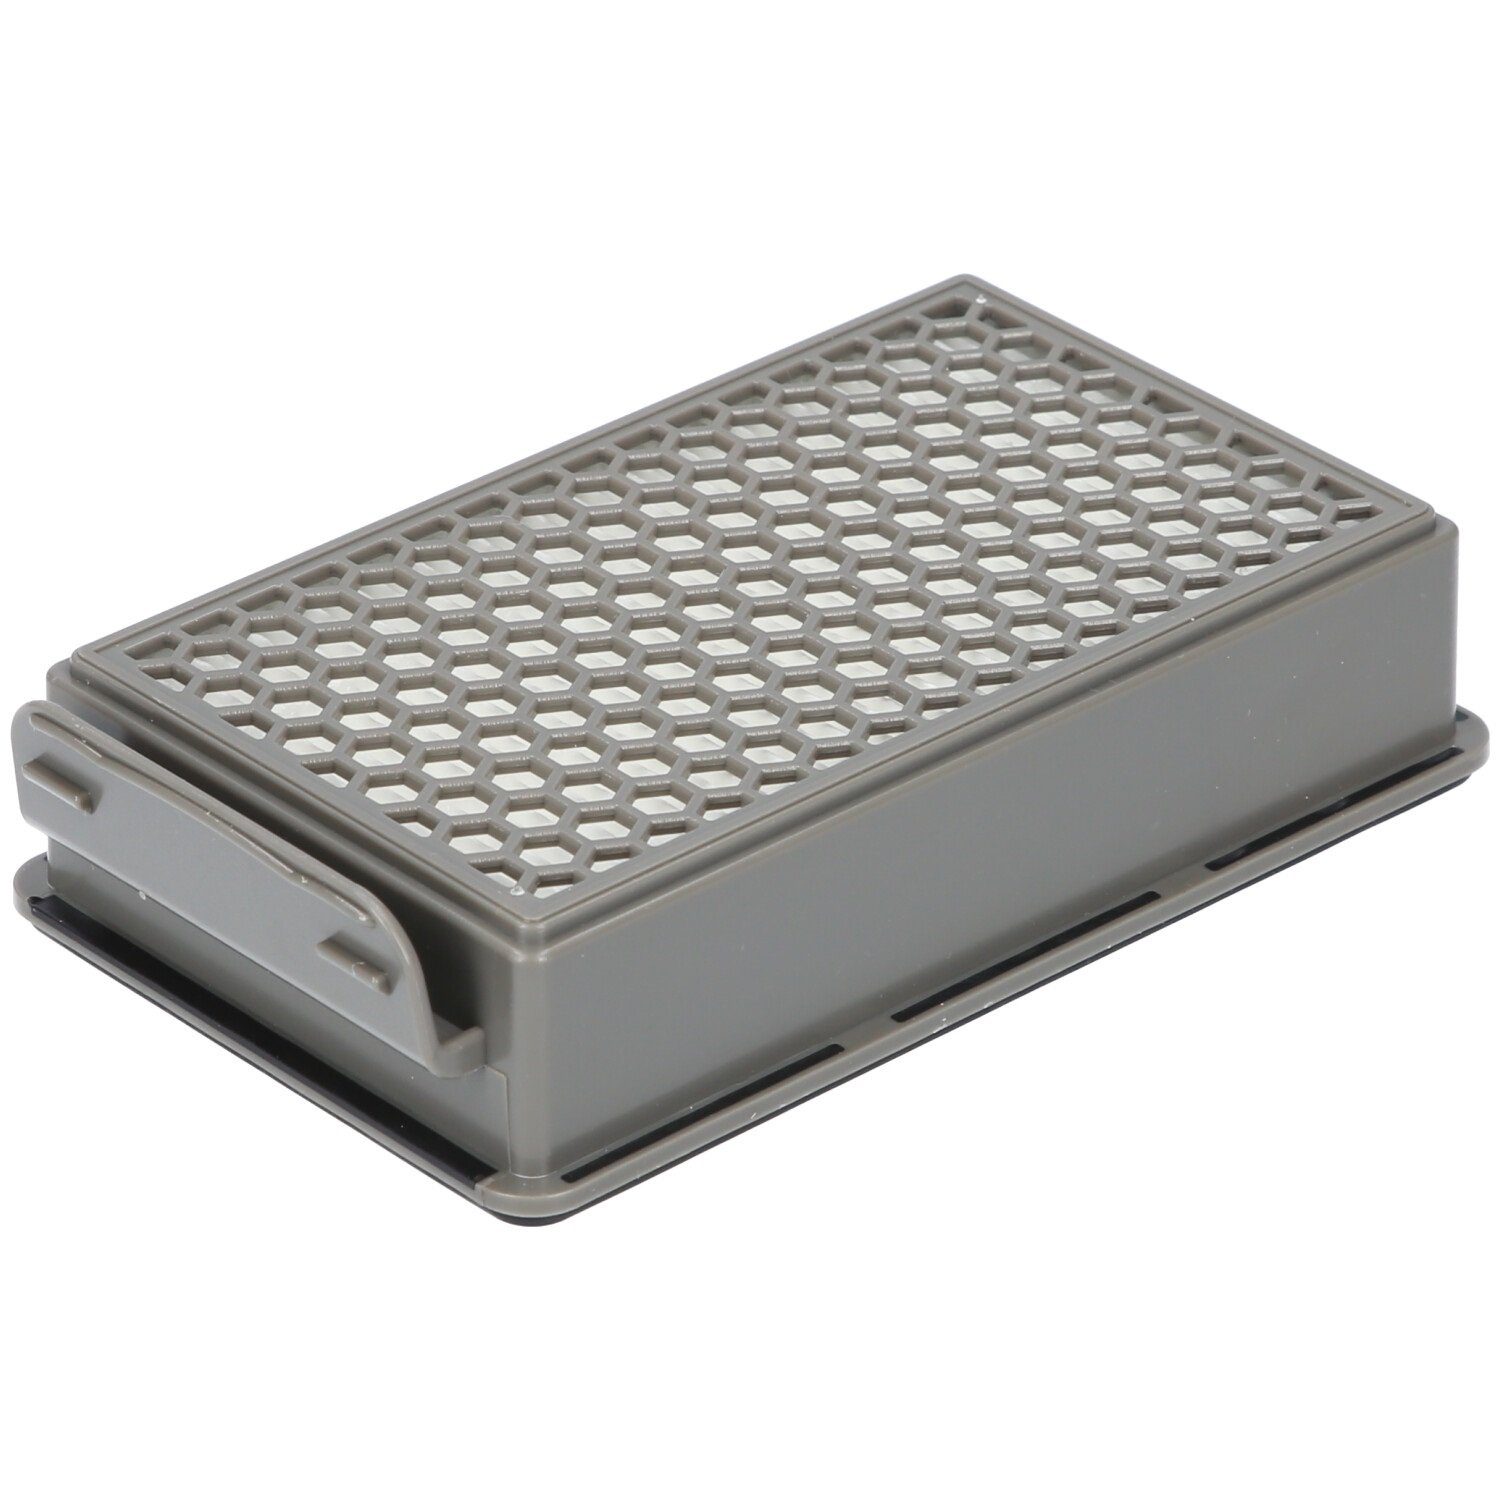 McFilter Filter-Set geeignet für Moulinex ZR005901 Alternativ Rundfilter, / MO3786PA, MO3774PA, / / 2x MO3751PA für Filterkassette, MO3718PA 2x MO3723PA